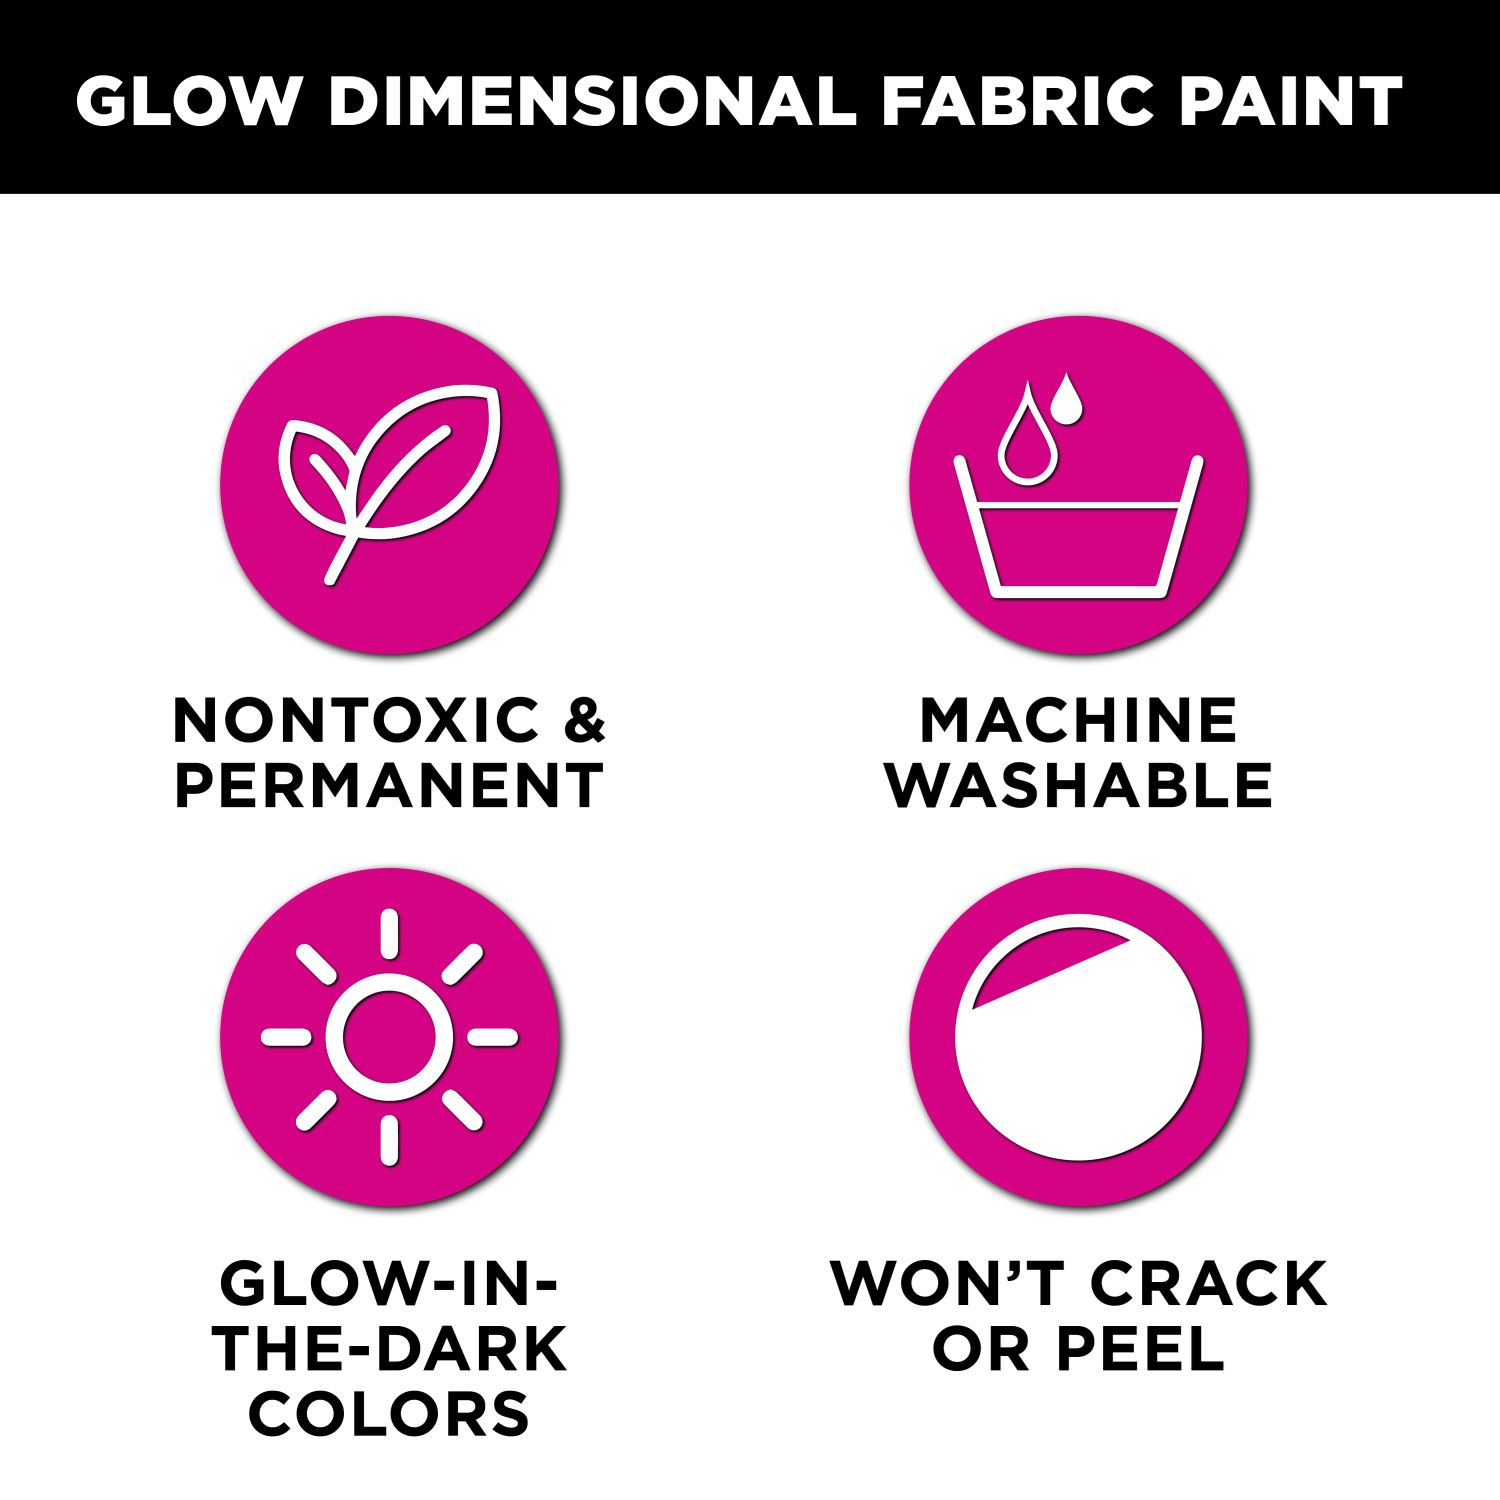 Best Glow in the Dark Fabric Paint - Tulip Dimensional Glow in the Dark  Fabric Paint 